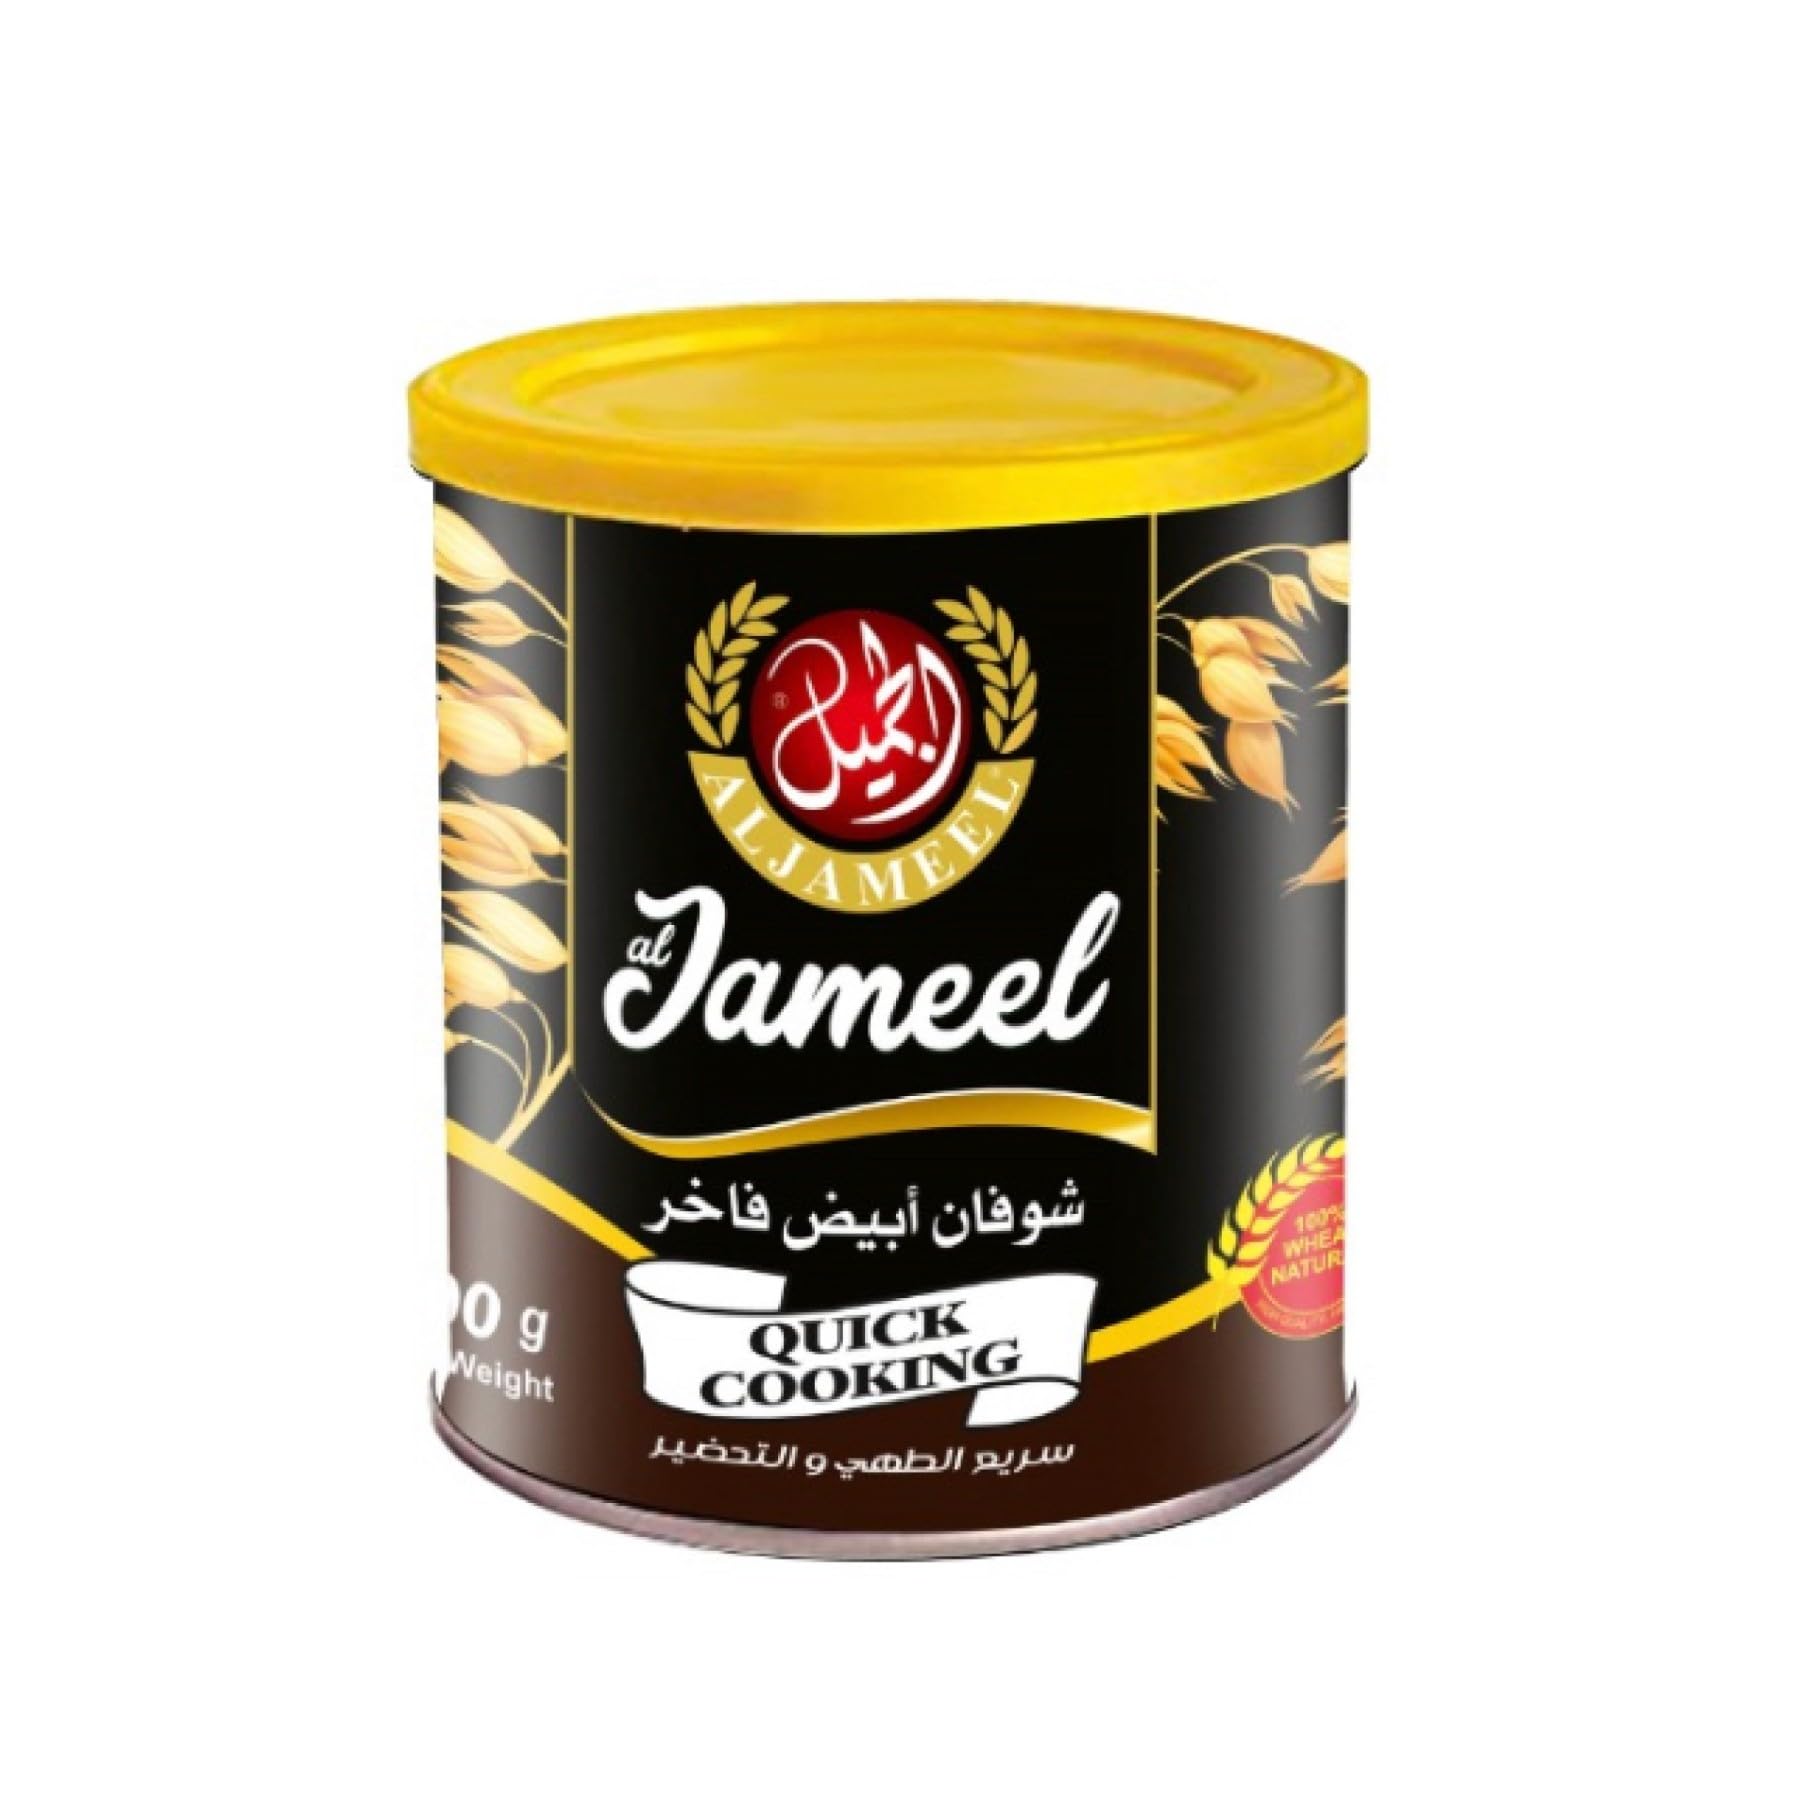 Al Jameel White Oats, 400 G